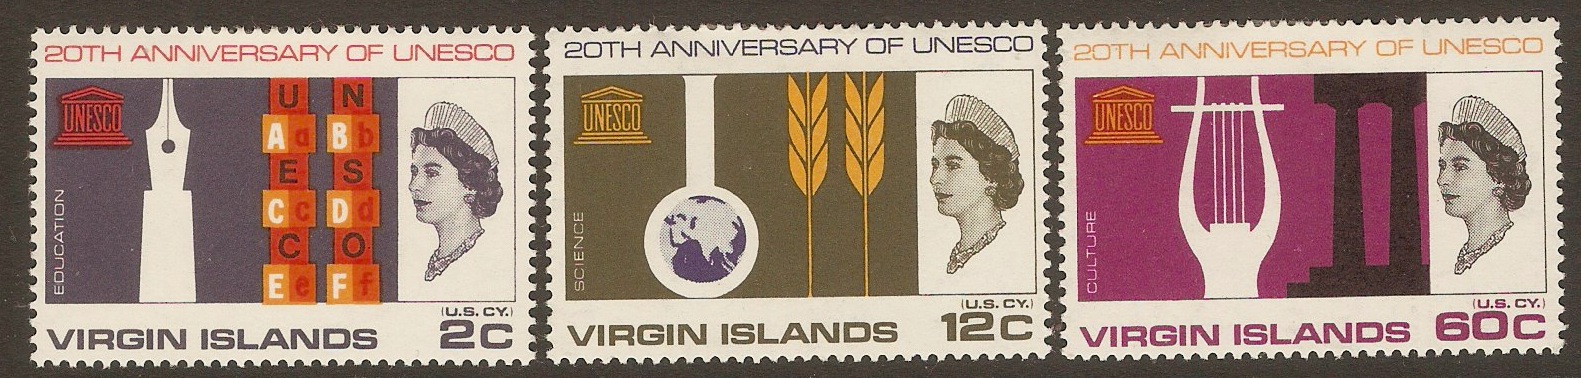 British Virgin Islands 1966 UNESCO Anniversary set. SG210-SG212.